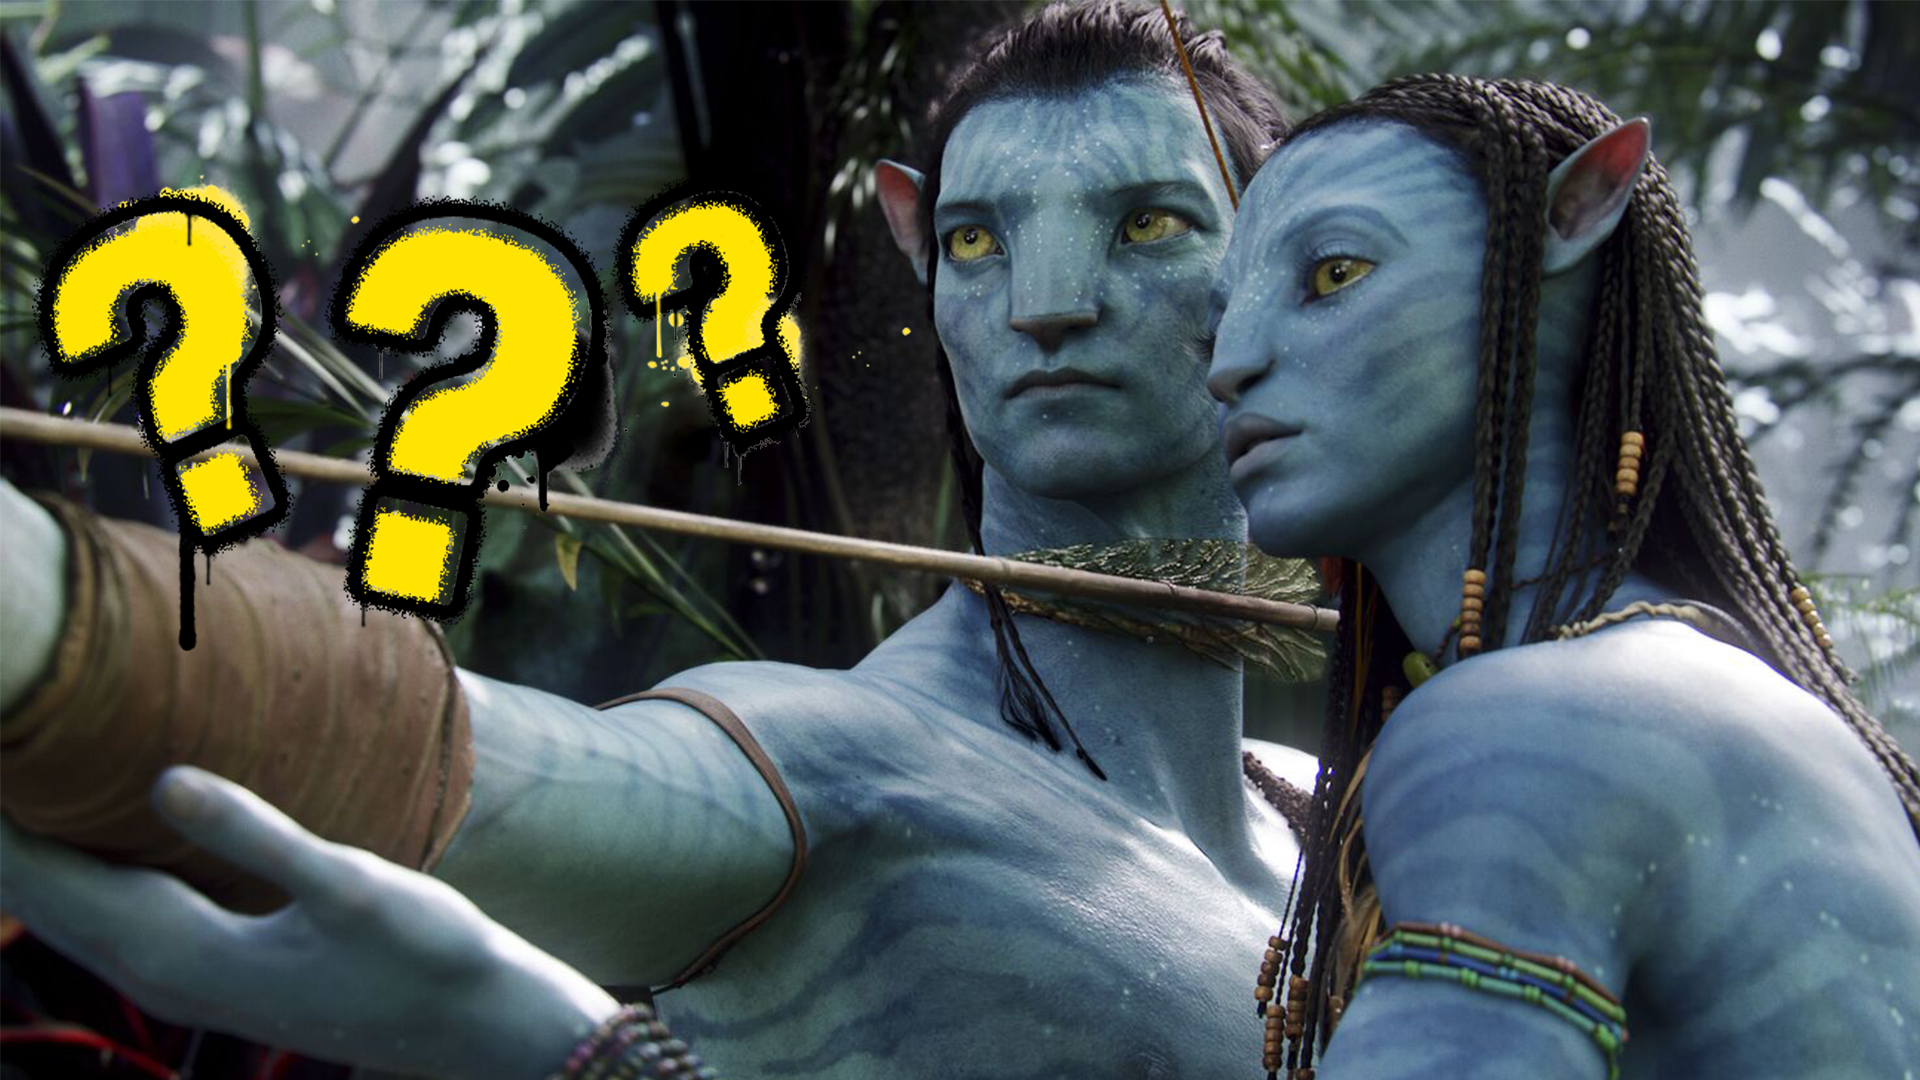 Avatar Film 2009 15Question Multiple Choice Quiz by Bradley Thompson